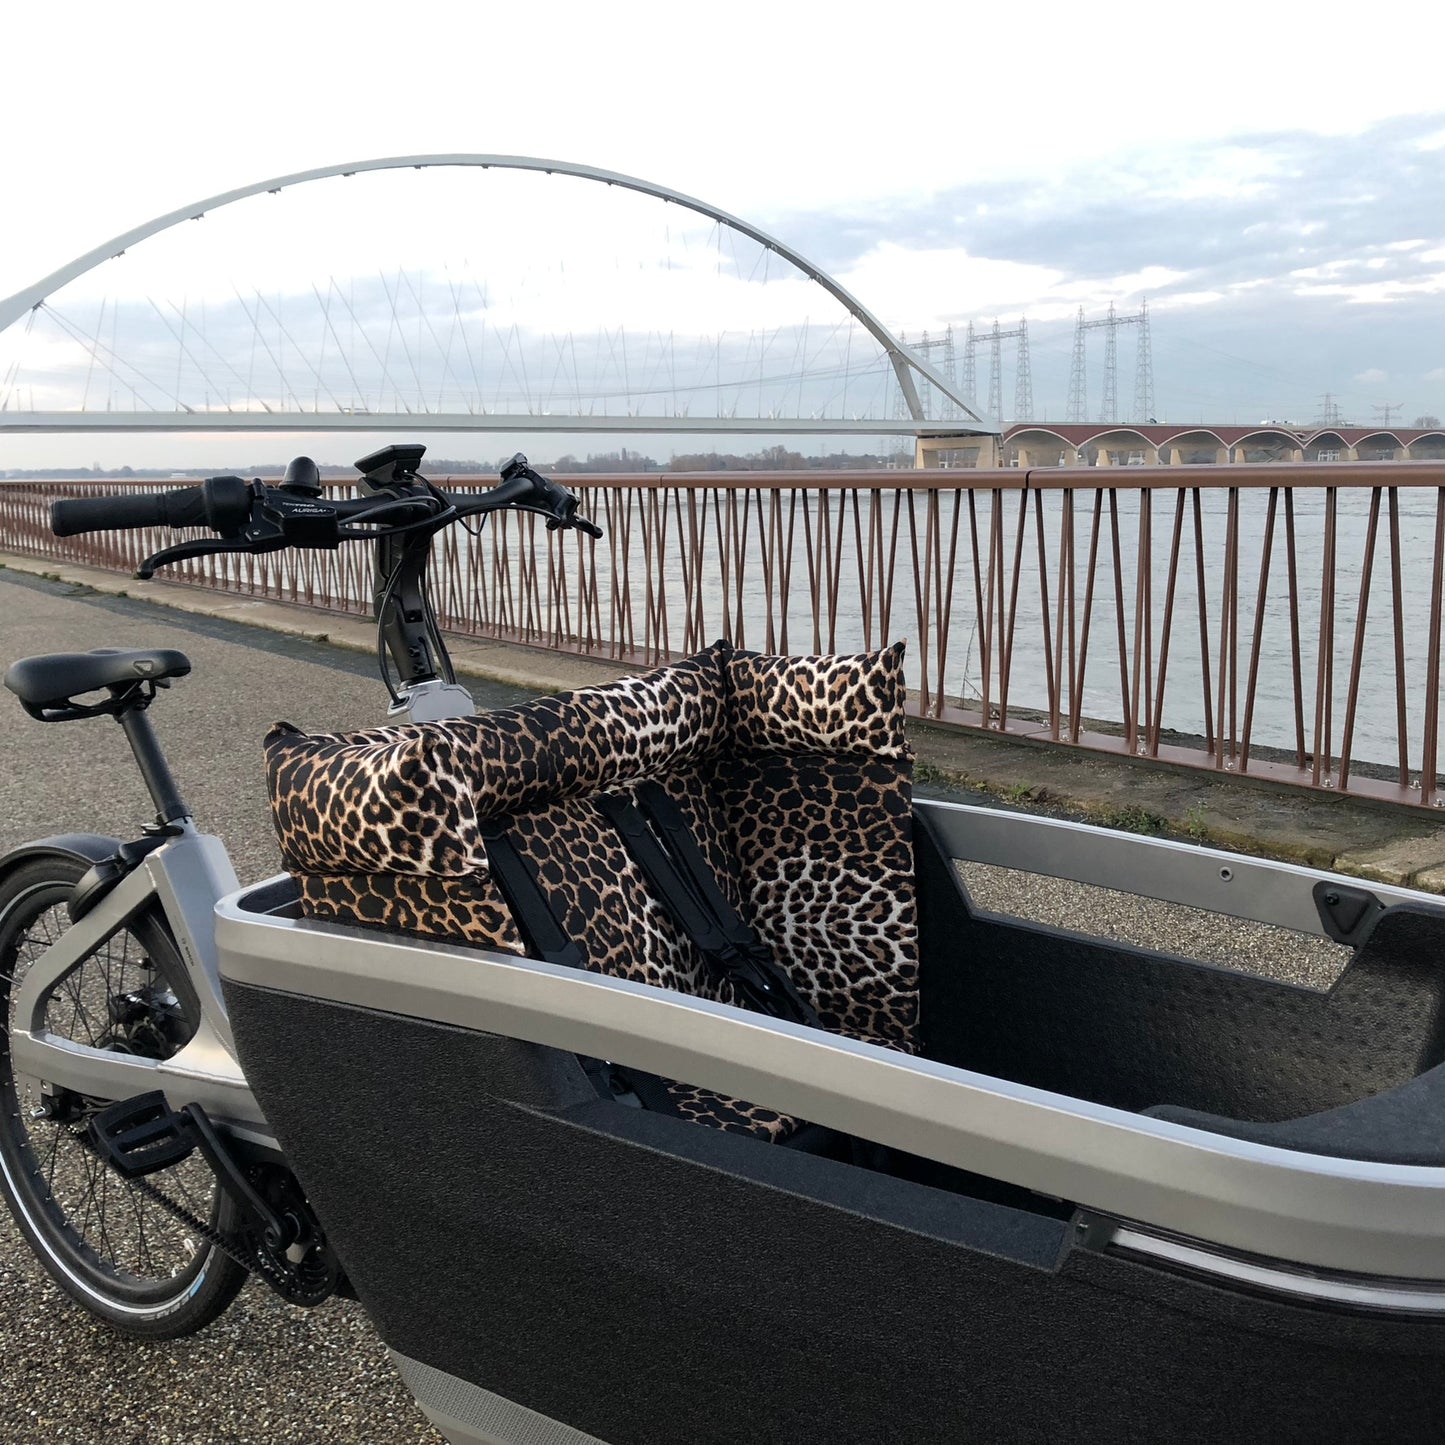 Cargo bike cushion Lovens - Leopard